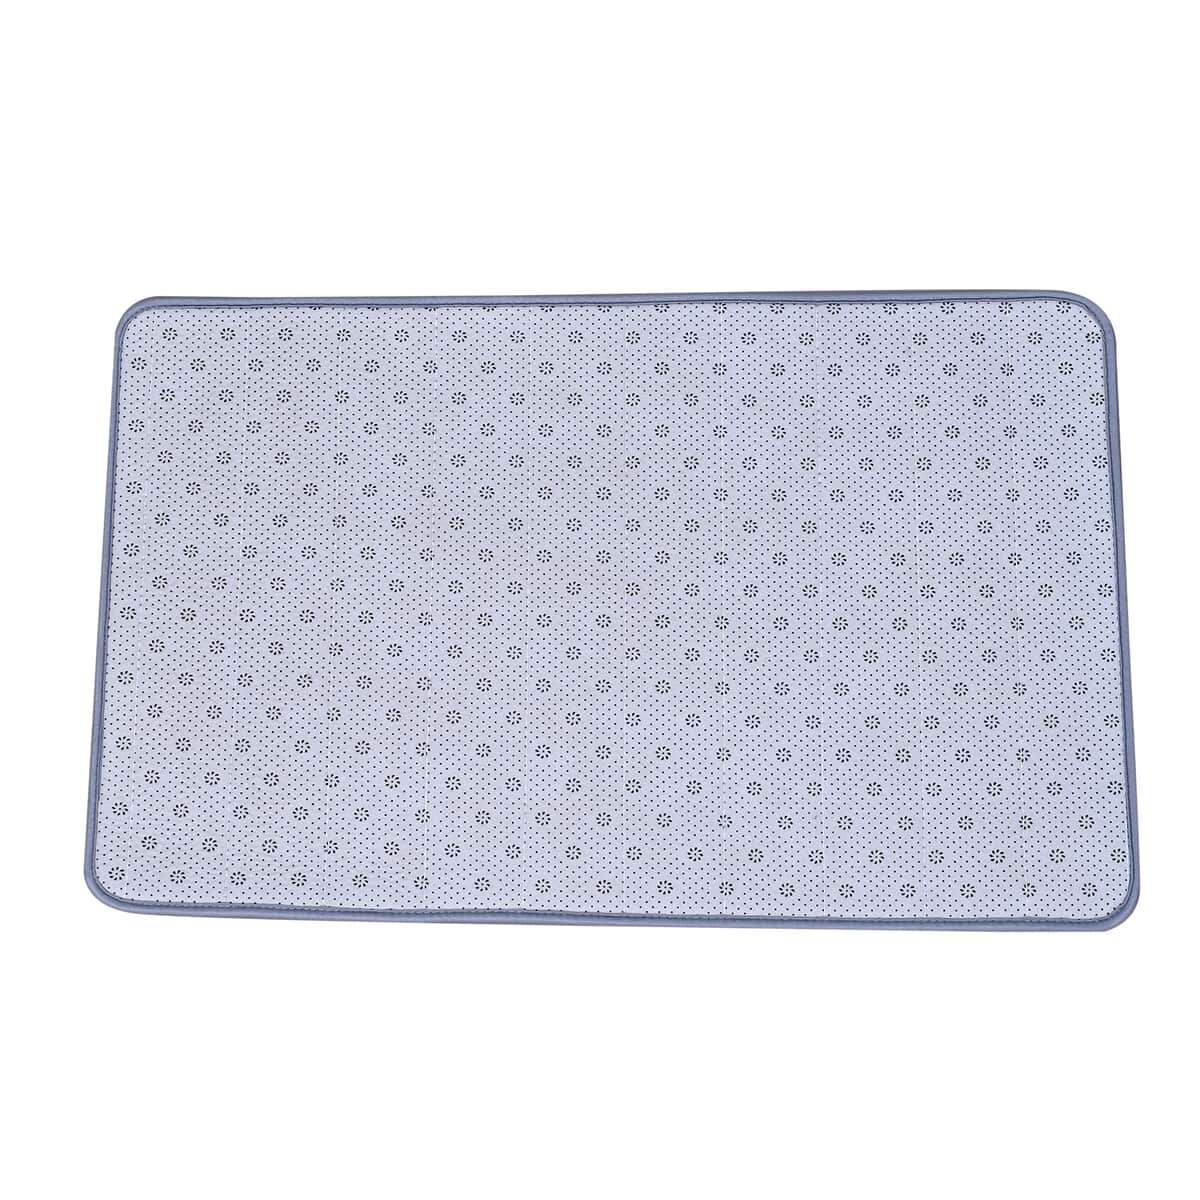 Gray Color Microfiber Anti-Slip Bathmat (19.8"x31.5") image number 6